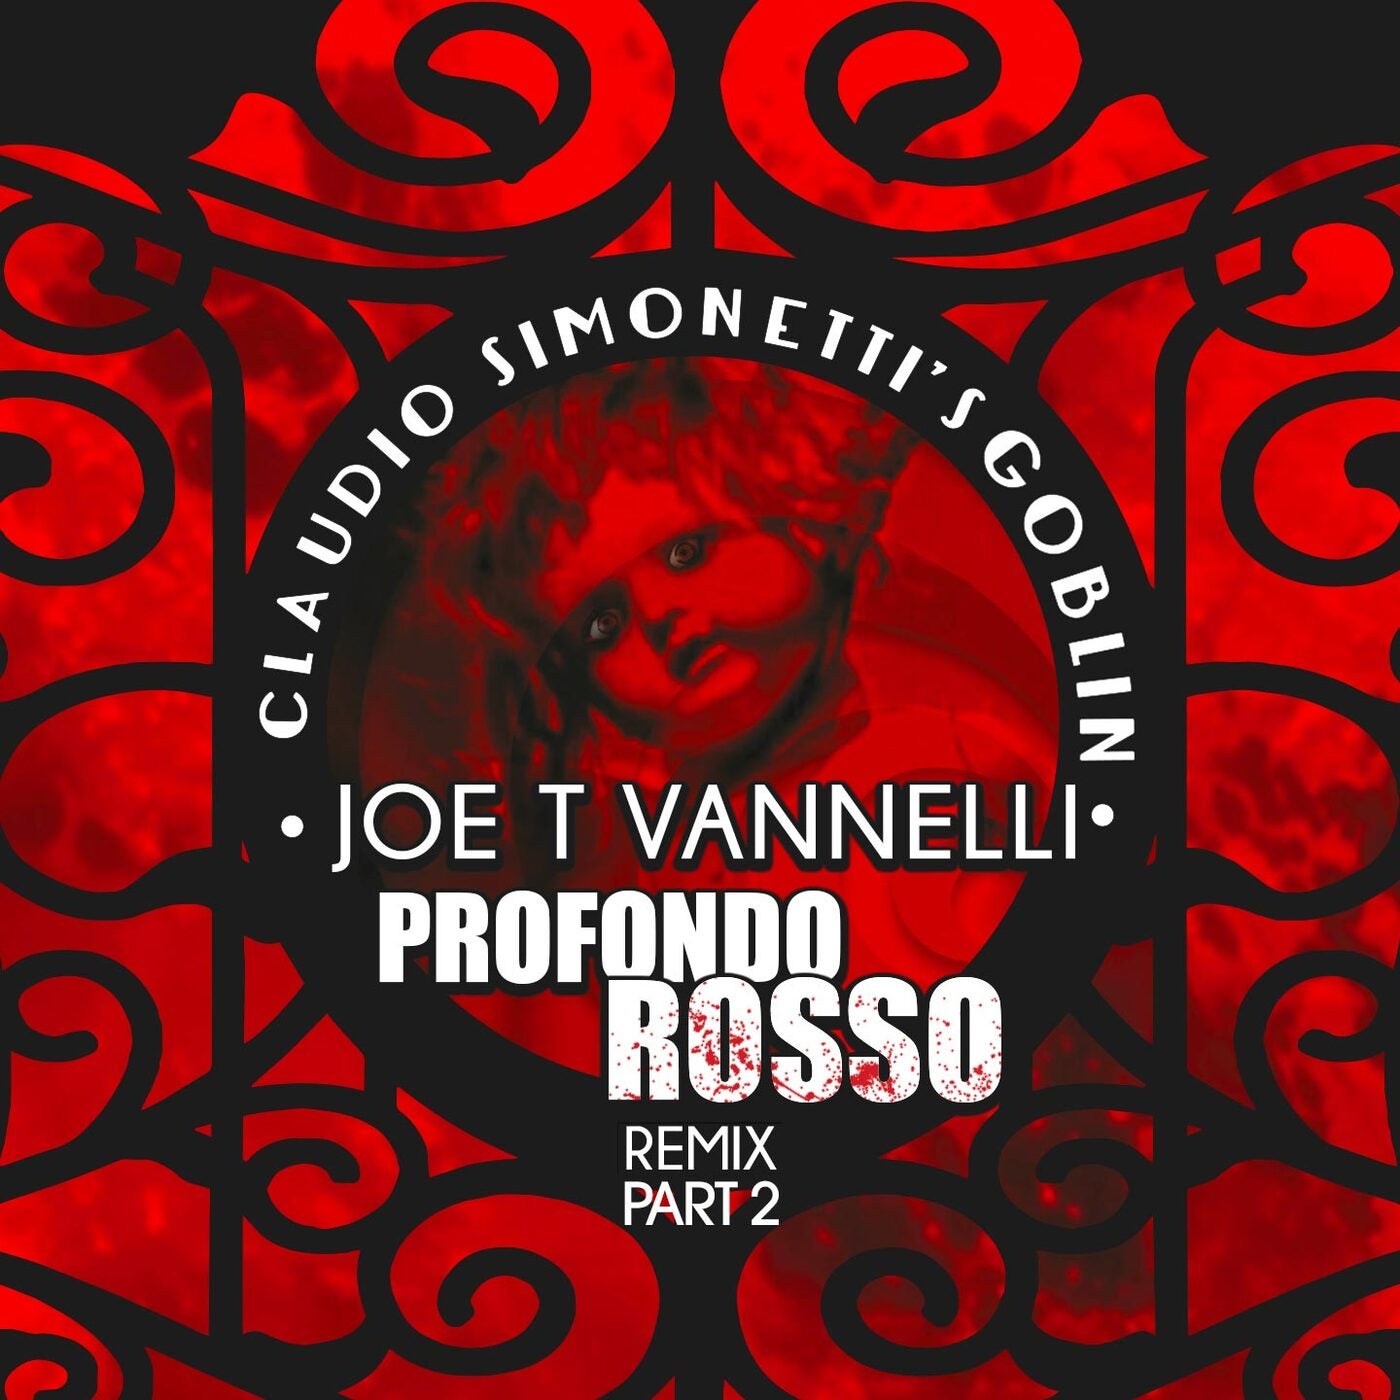 Joe T Vannelli Music & Downloads on Beatport